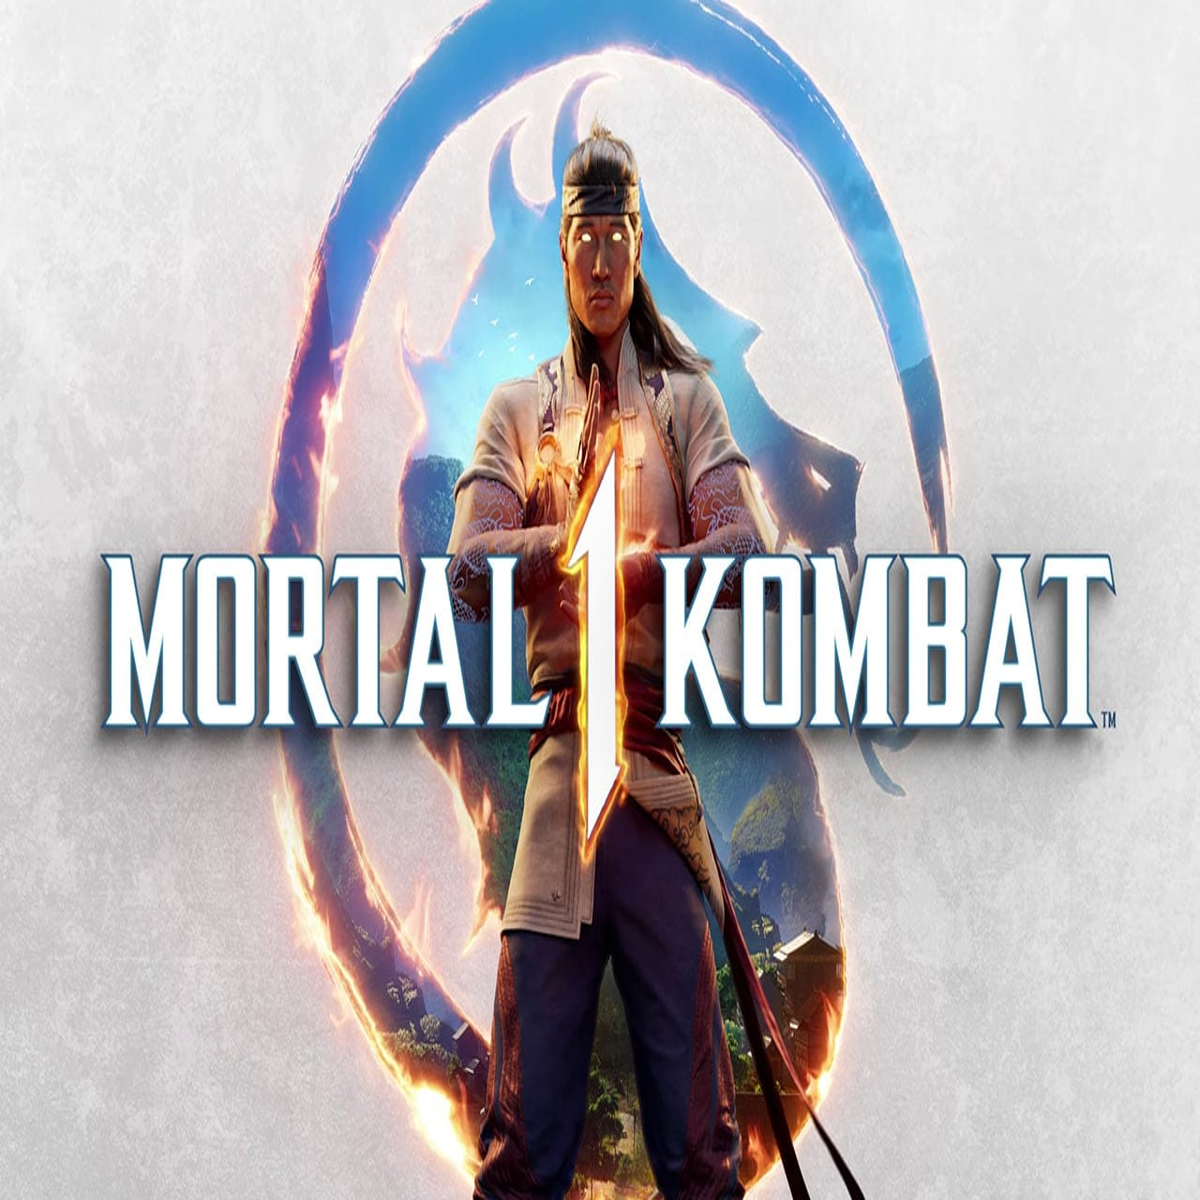 E esse poster da Kitana baseado no - Arquivo Mortal Kombat